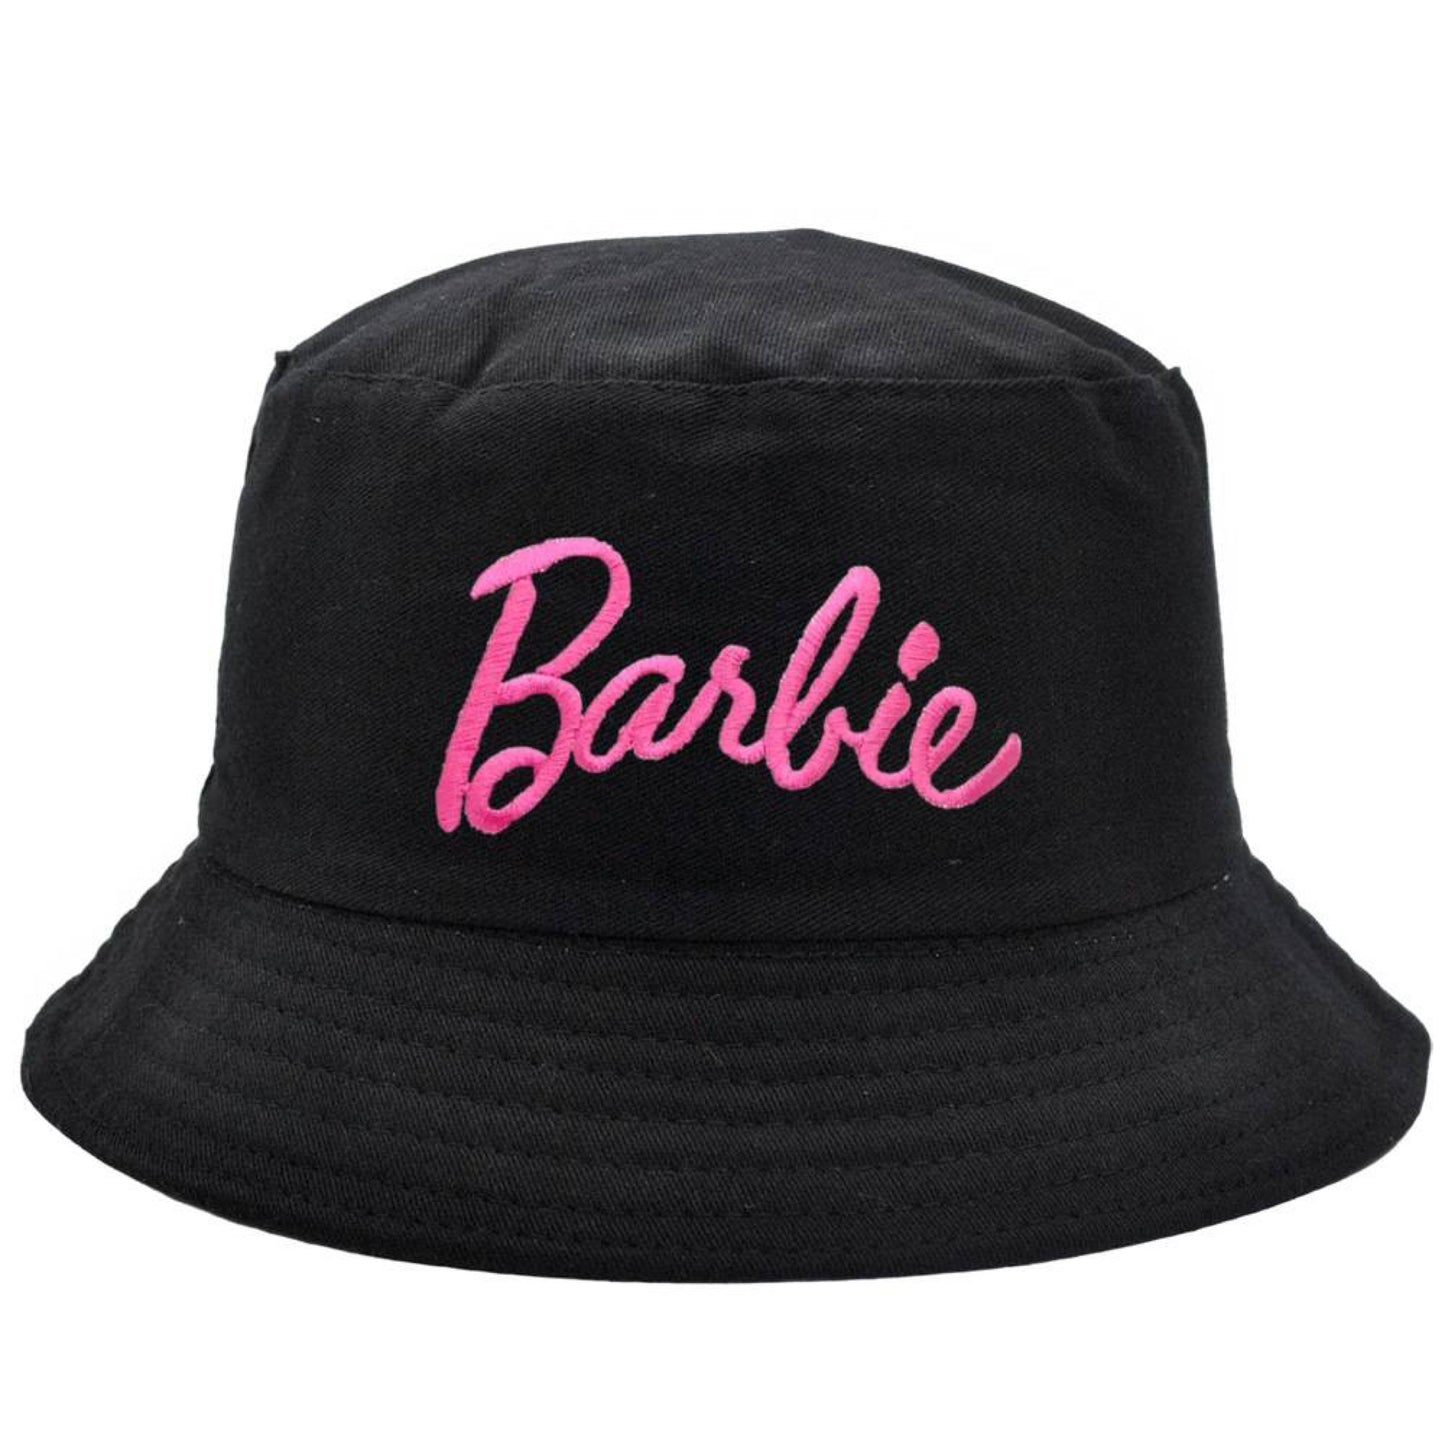 Barbie hat